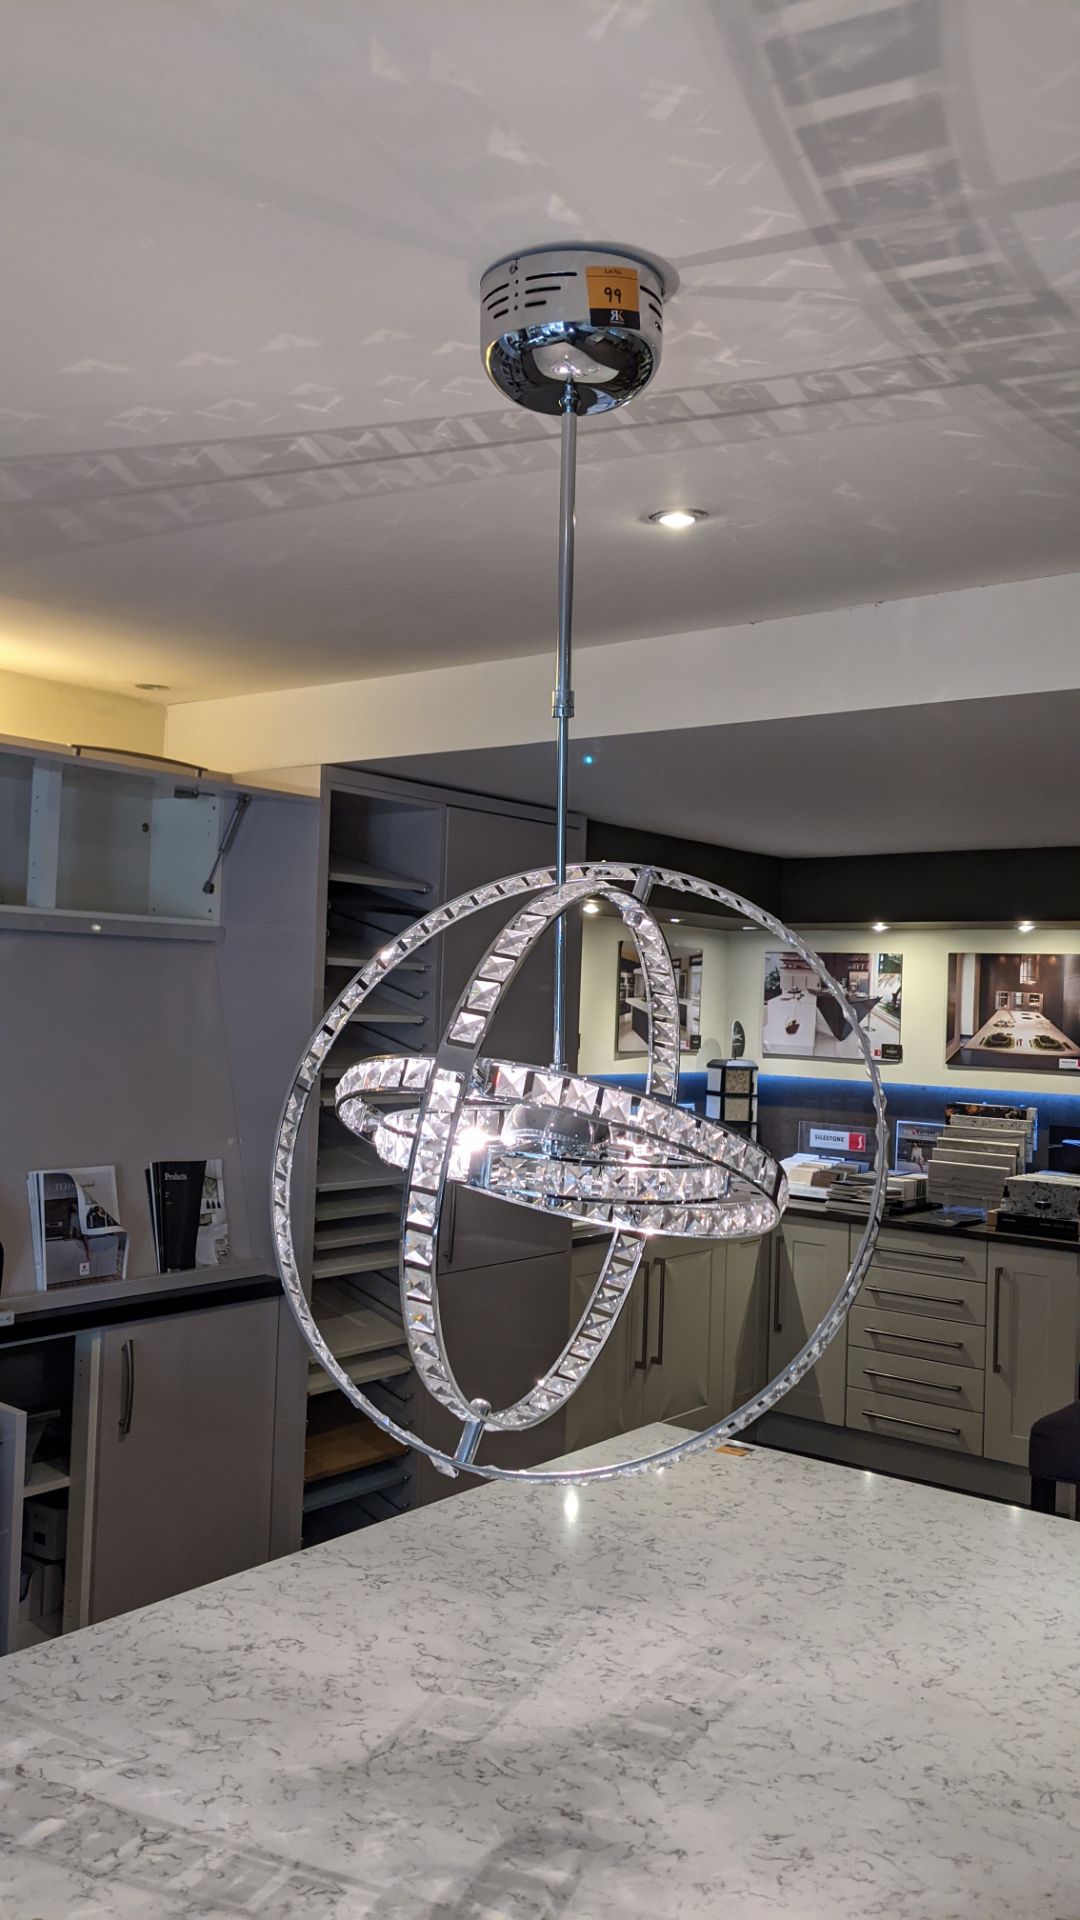 Ceiling suspended halogen light fitting - Image 7 of 7